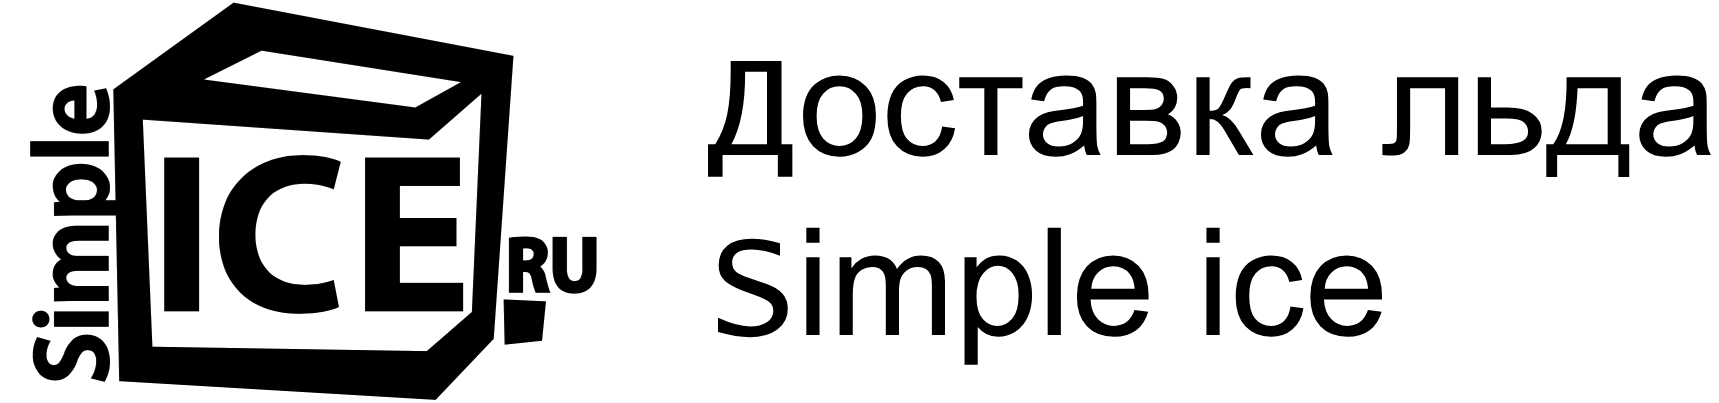 логотип доставка льда Симпл айс 